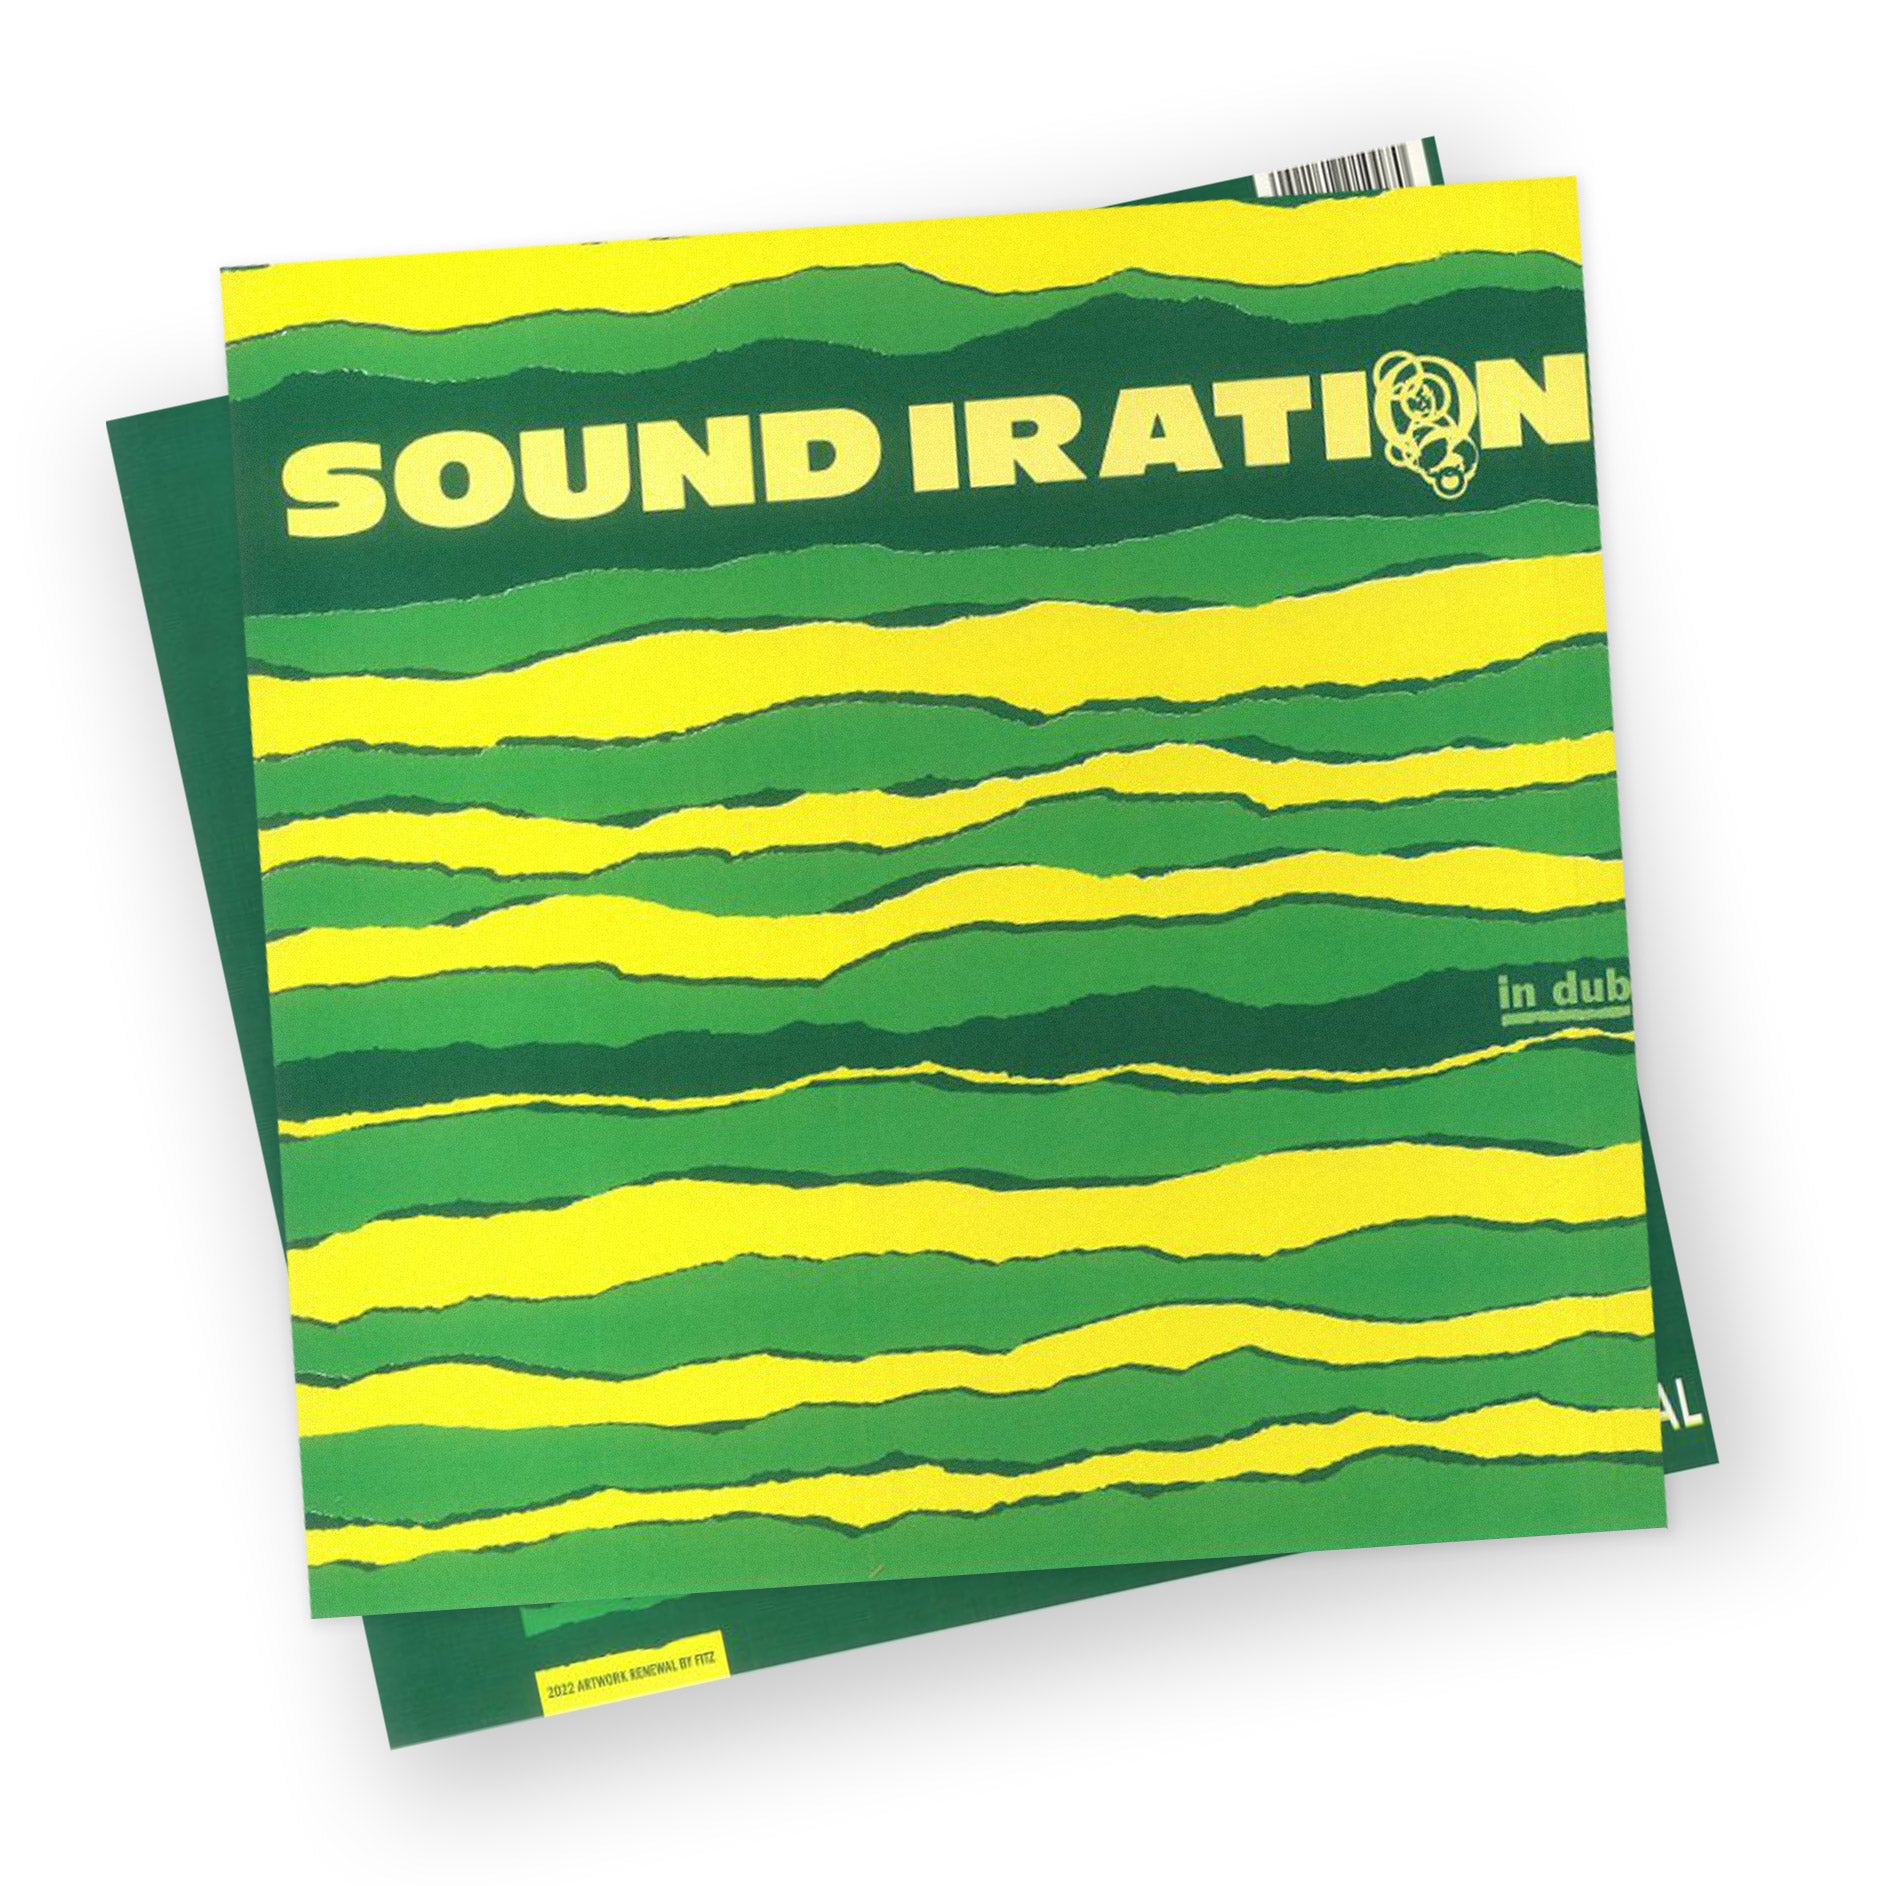 Sound Iration - In Dub